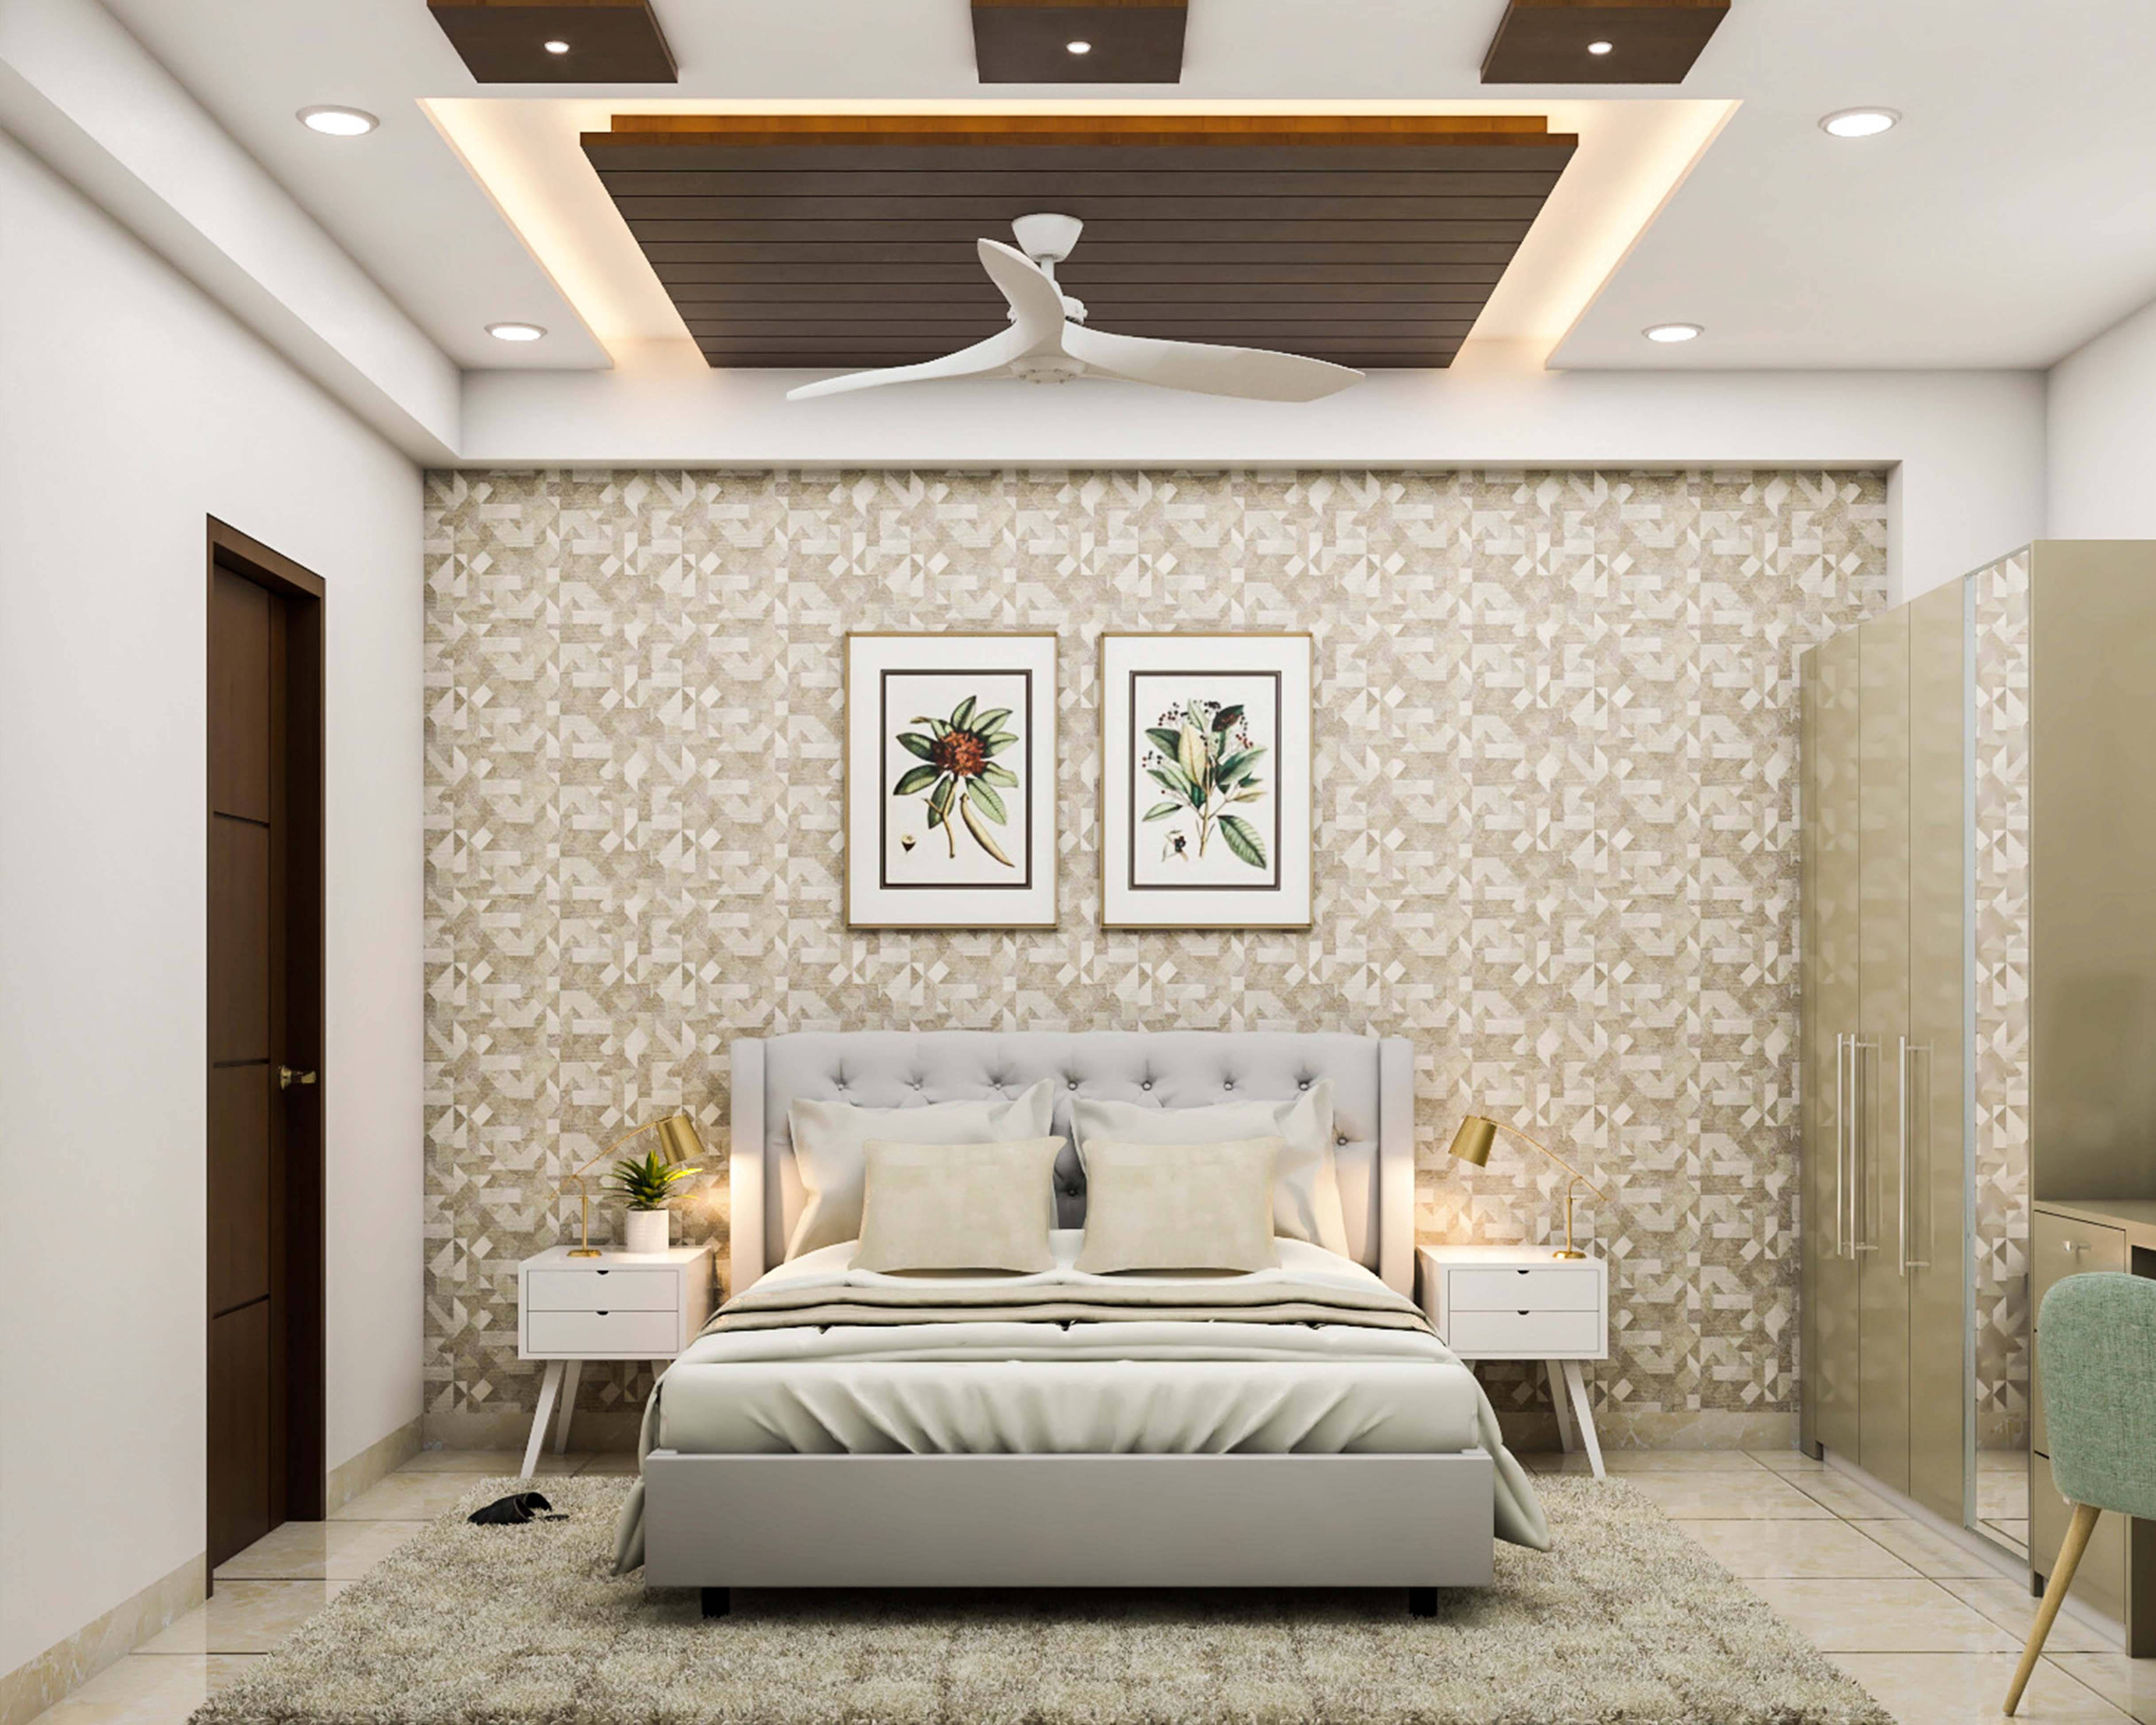 Minimal Master Bedroom Design With Floral Wallpaper And False Ceiling